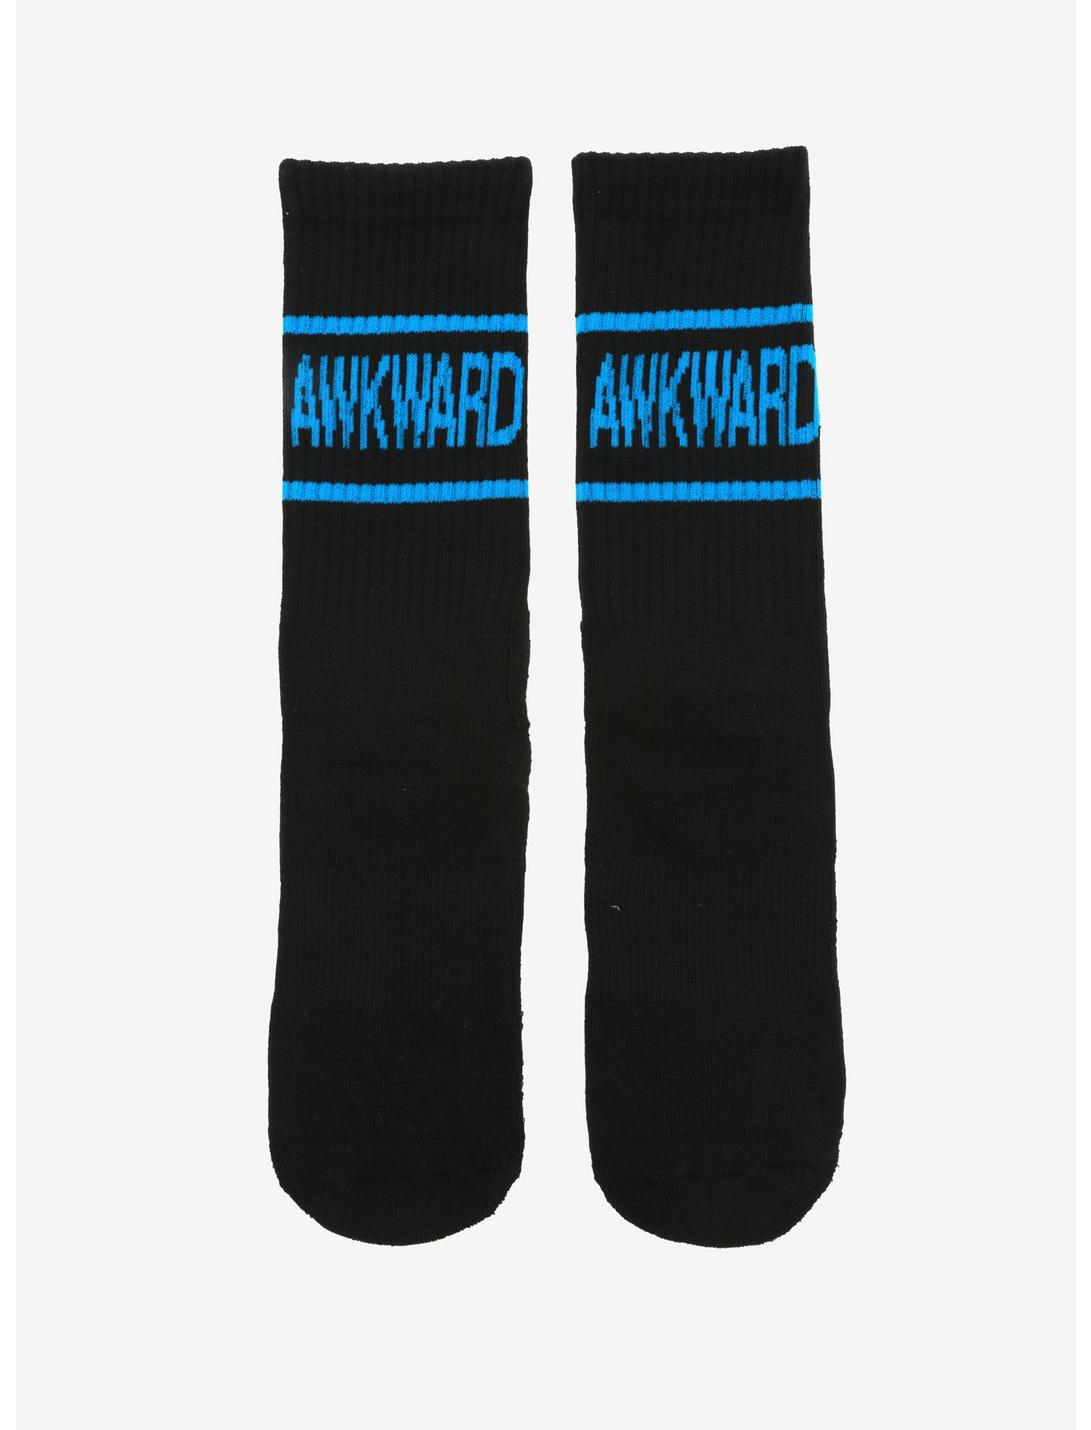 Awkward Crew Socks, , hi-res